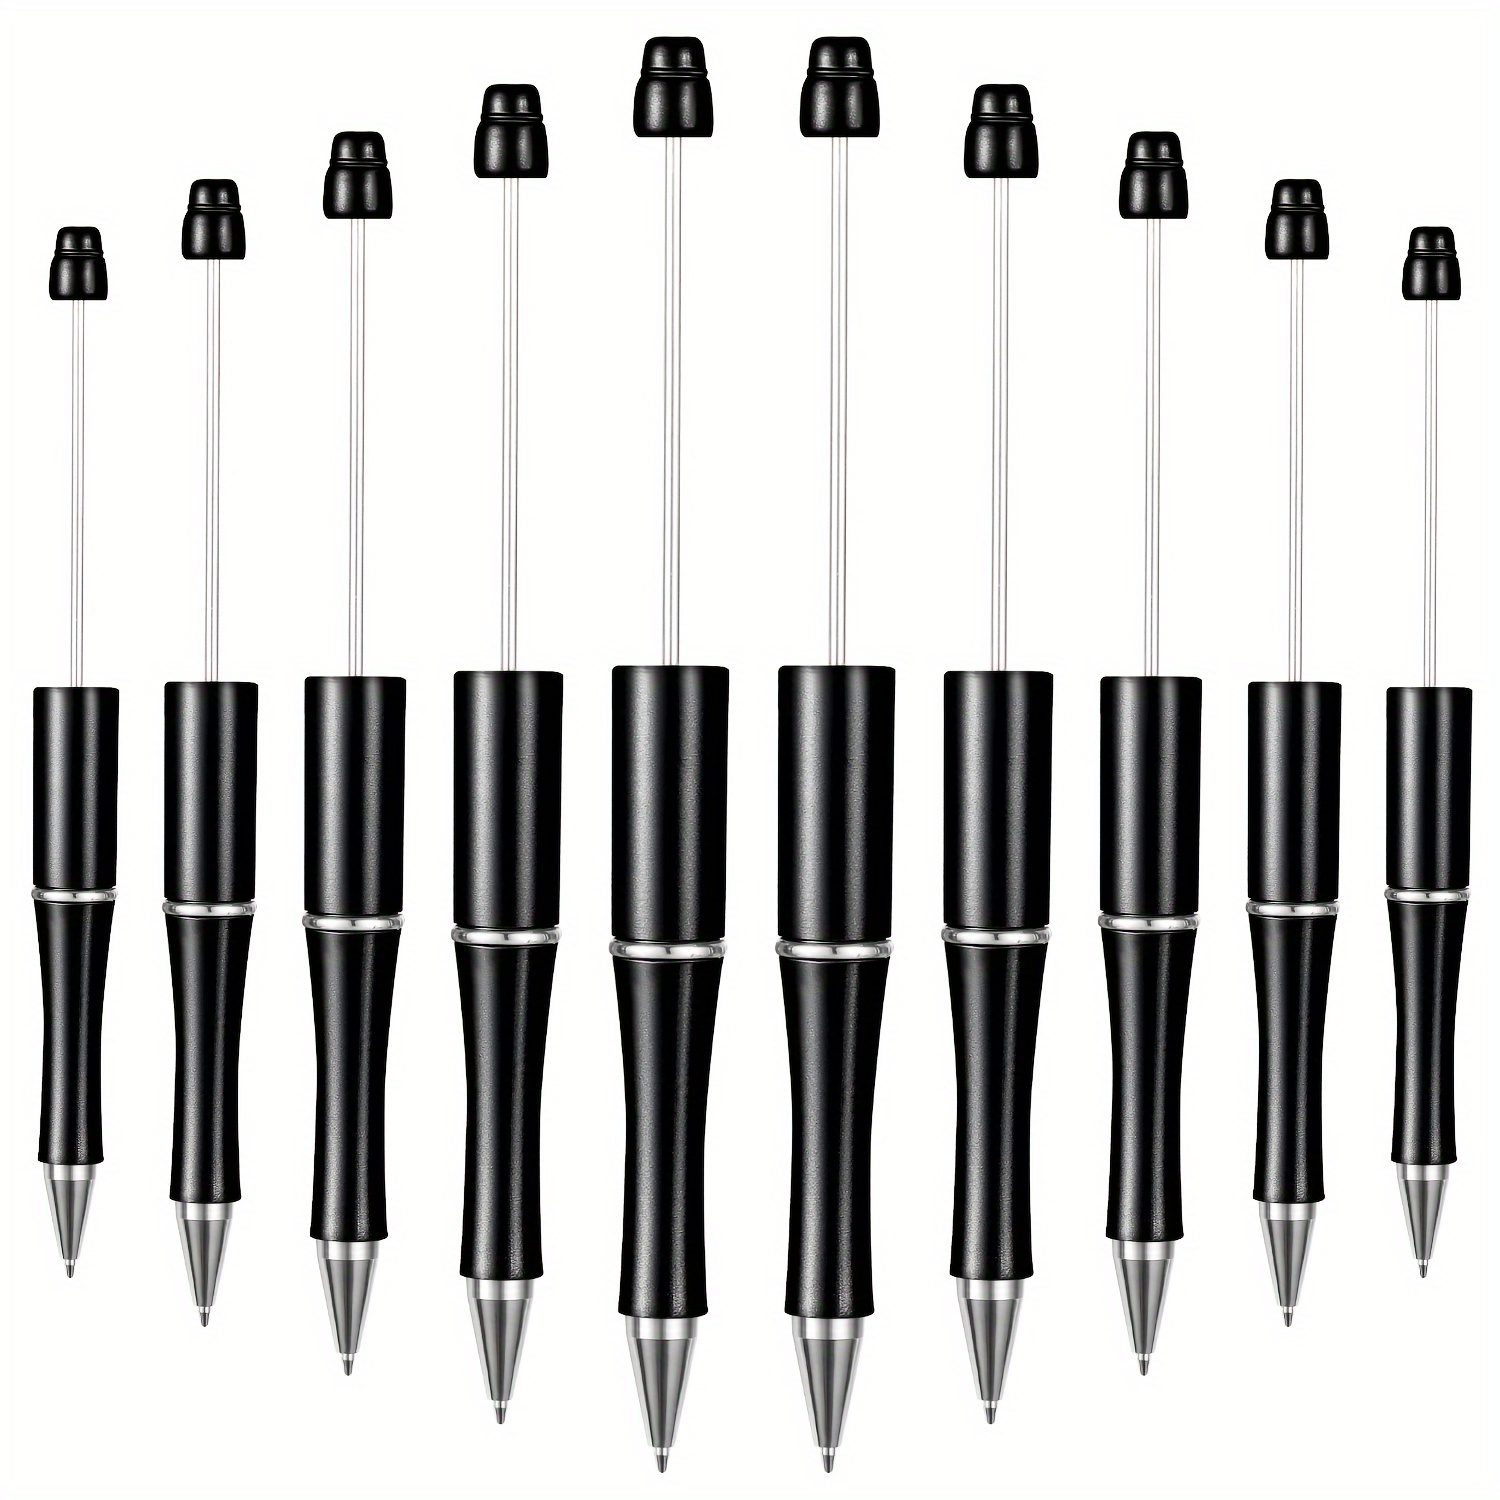 

10 Pieces Plastic Beadable Pen Bead Ballpoint Pen Assorted Bead Pen Shaft Black Ink Rollerball Pen With Extra Refills For Office School Supplies